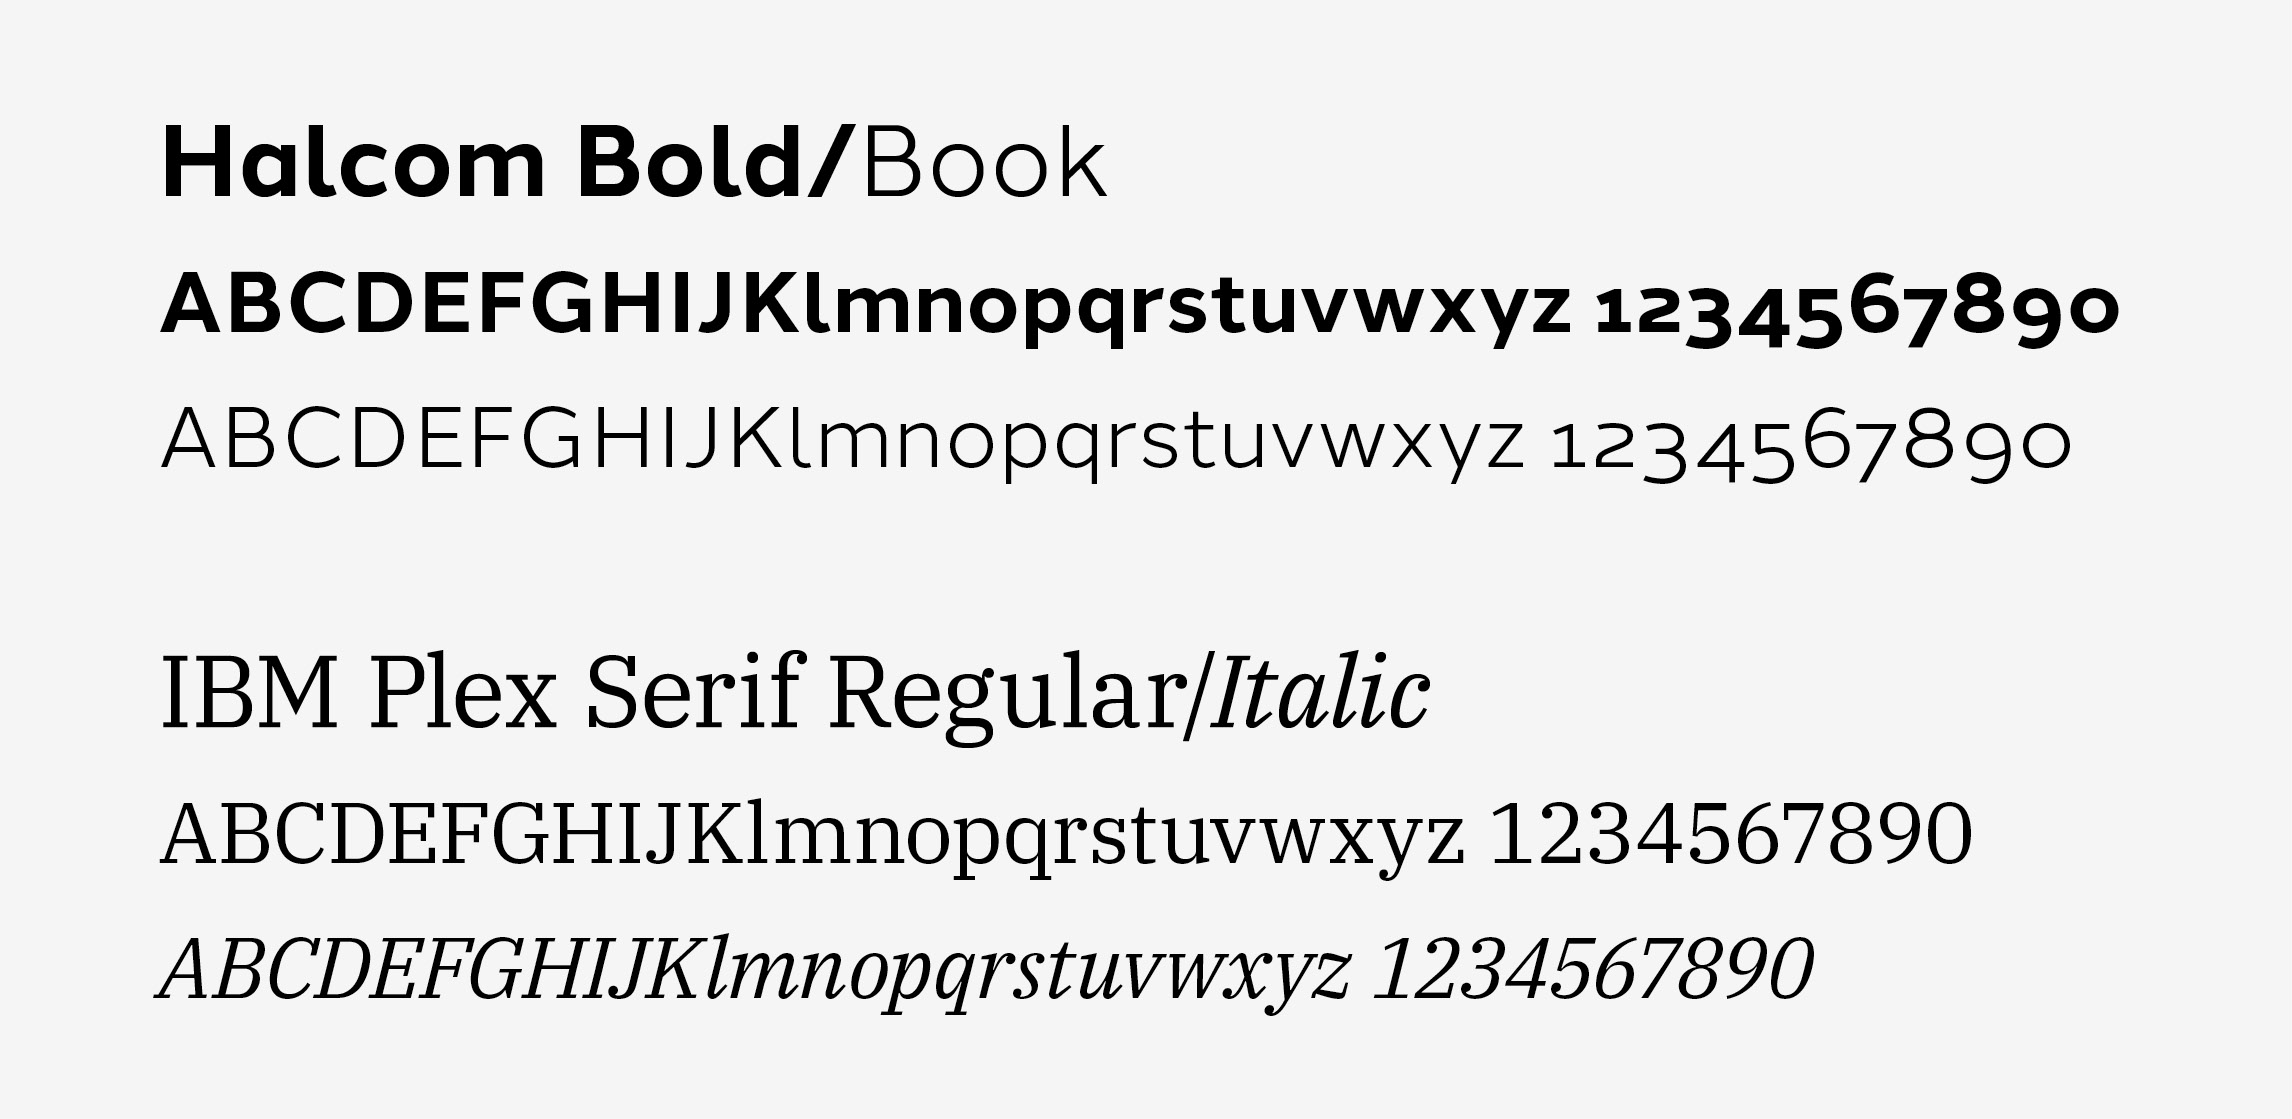 Empyrean Aero fonts: Halcom bold/book; IBM Plex Serif Regular/Italic